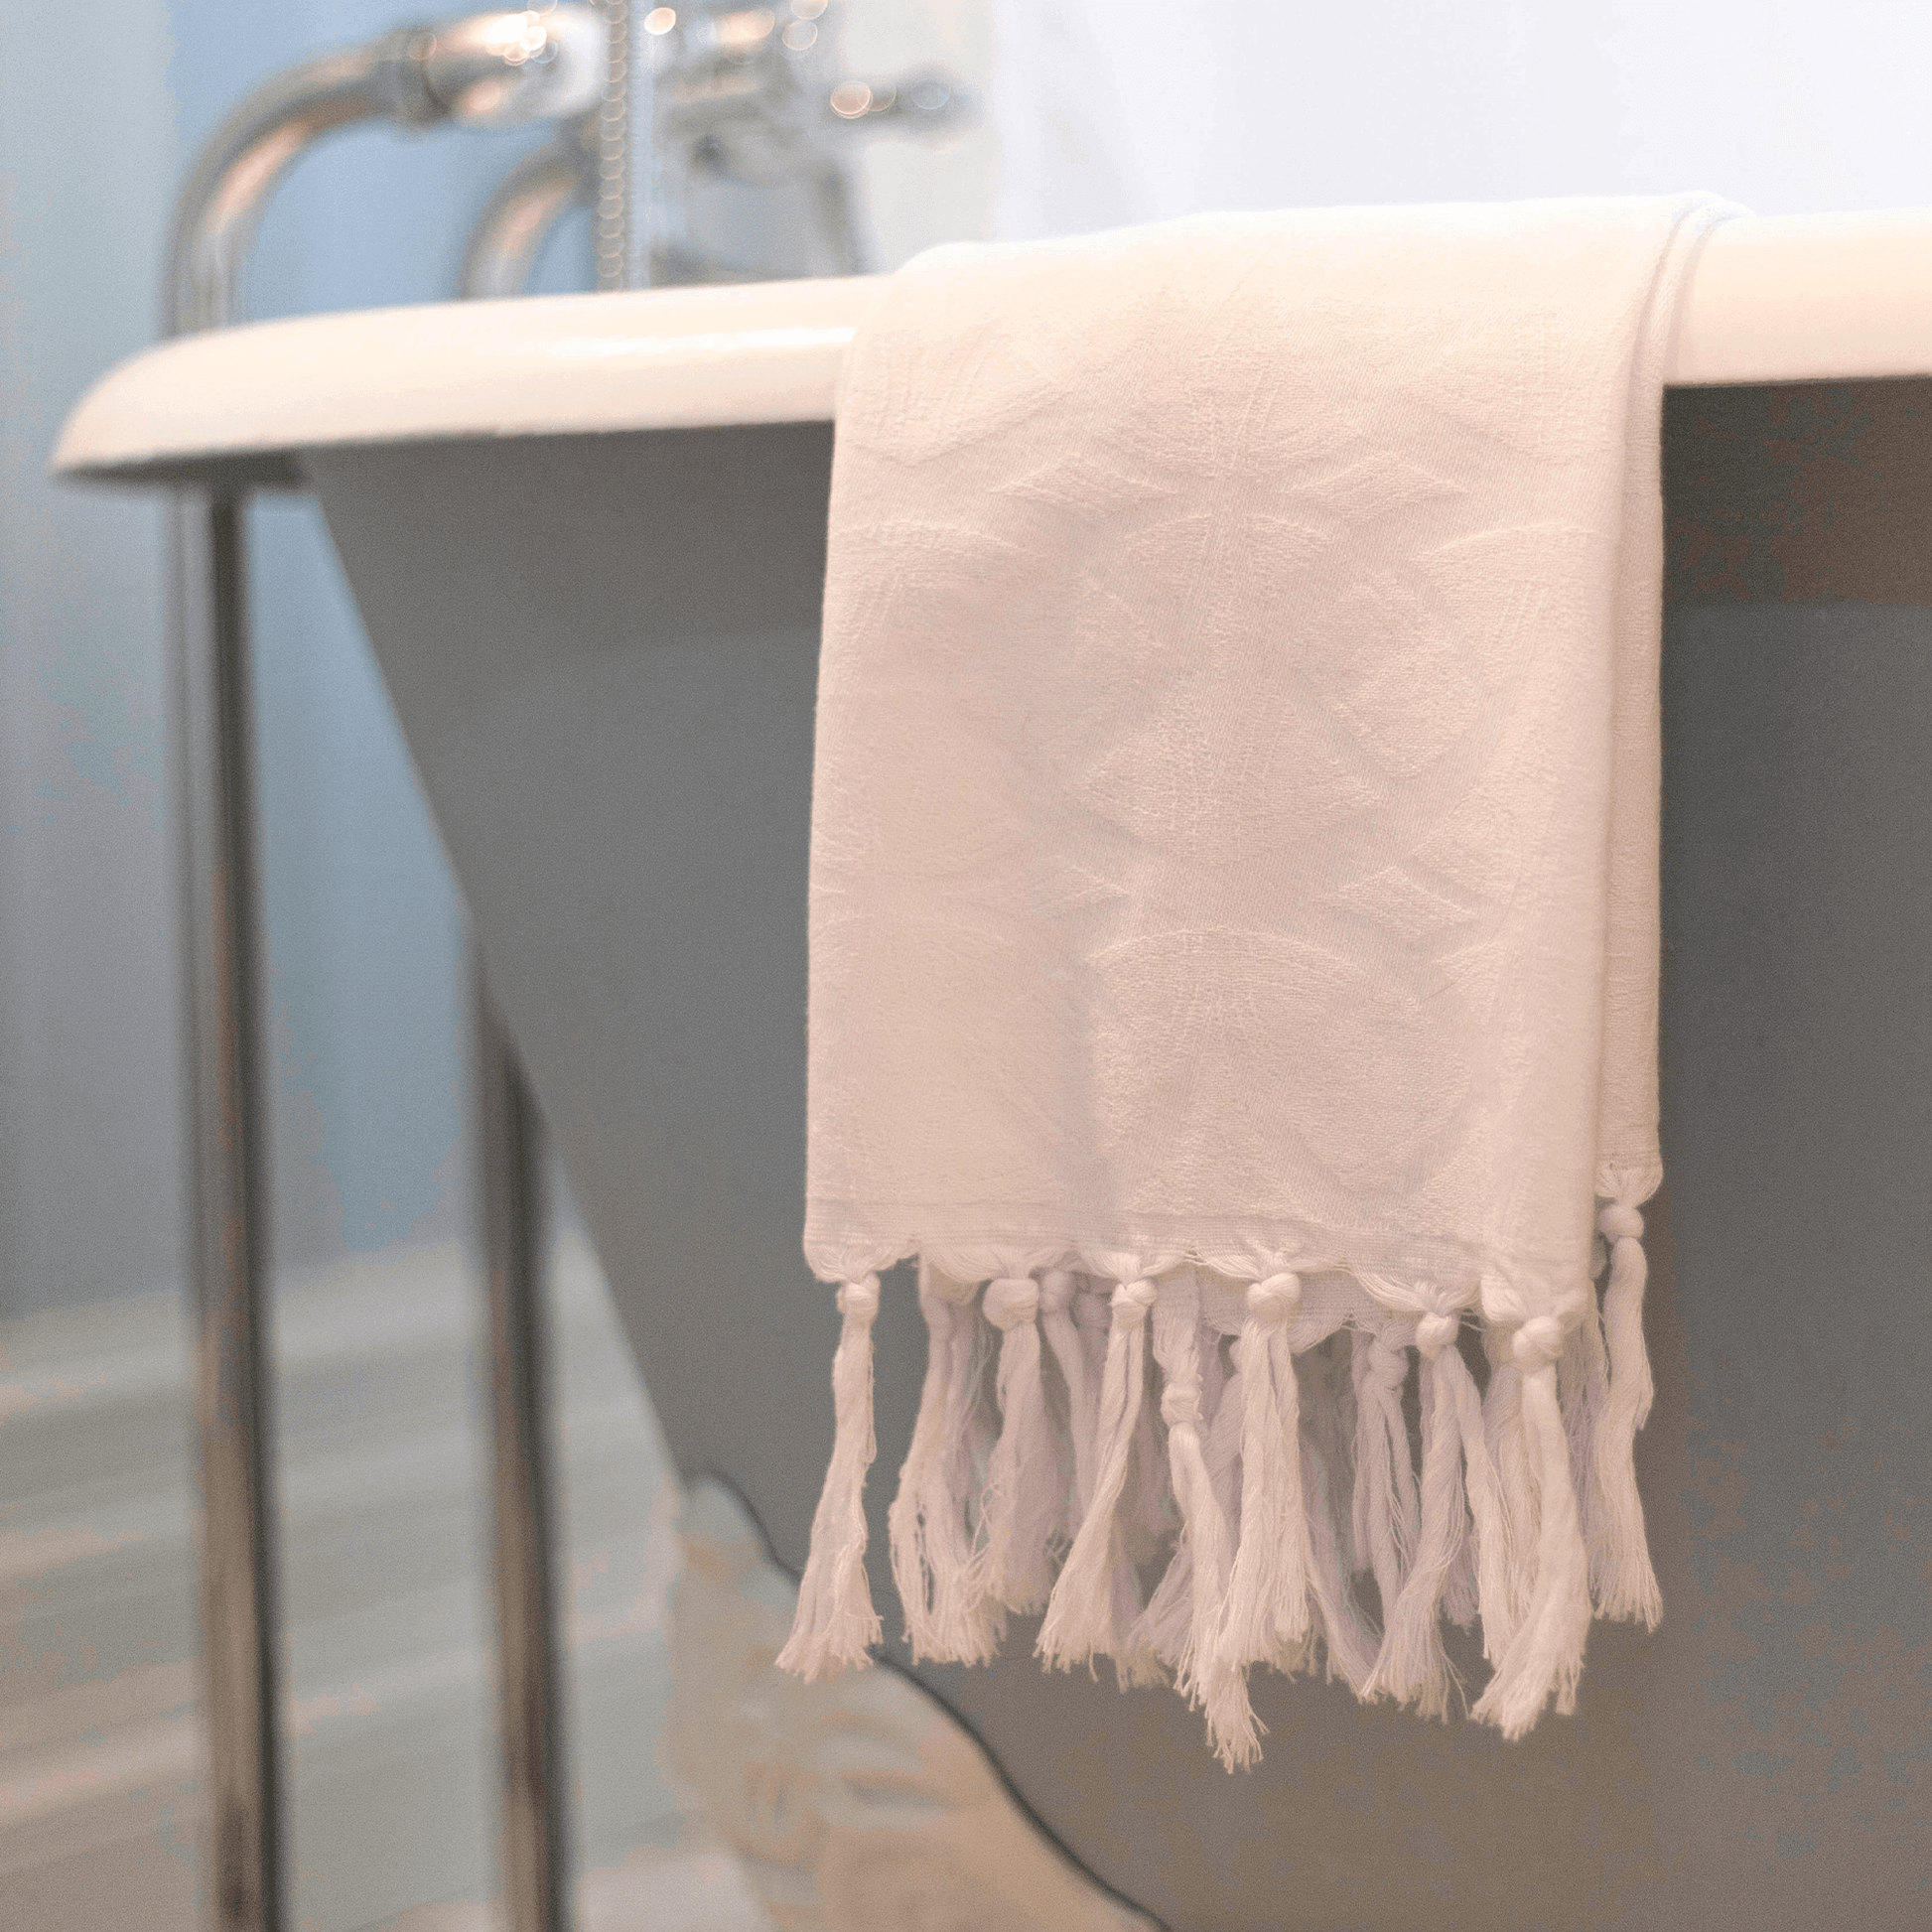 White Turkish towel in the bath